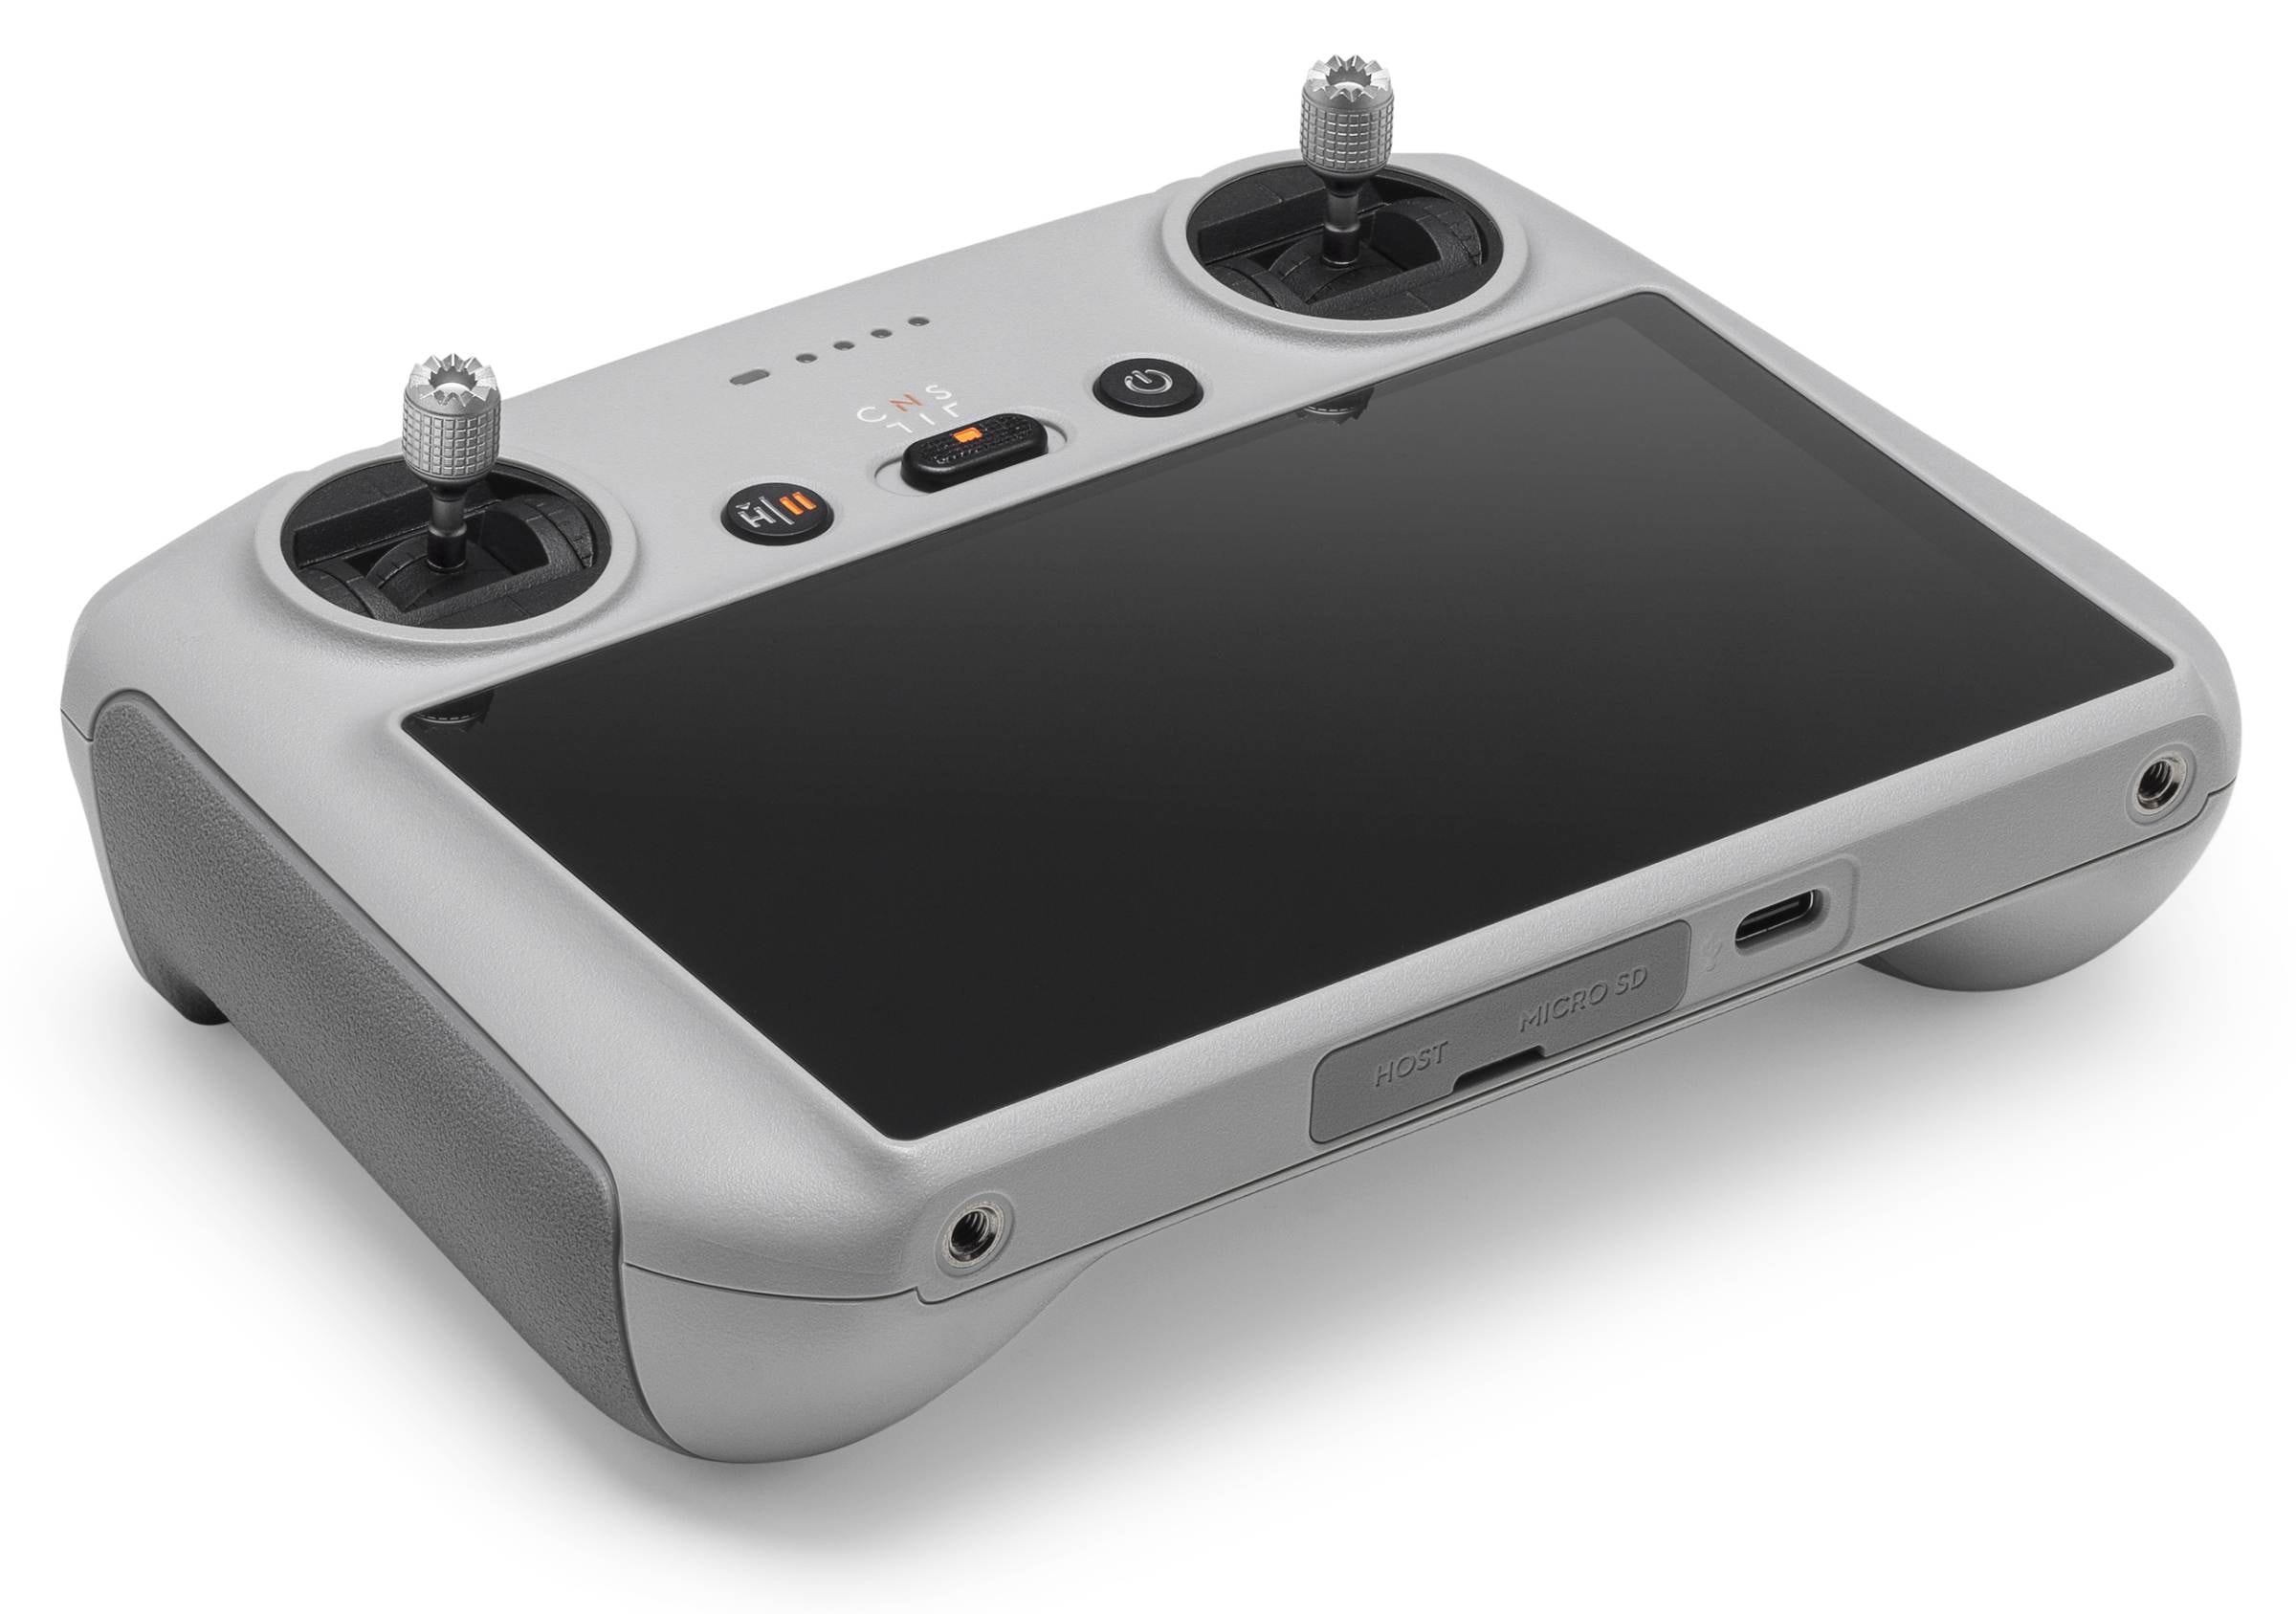 Accessoire drone DJI INNOVATION DJI Mini 3 Pro Fly More Kit Pas Cher 